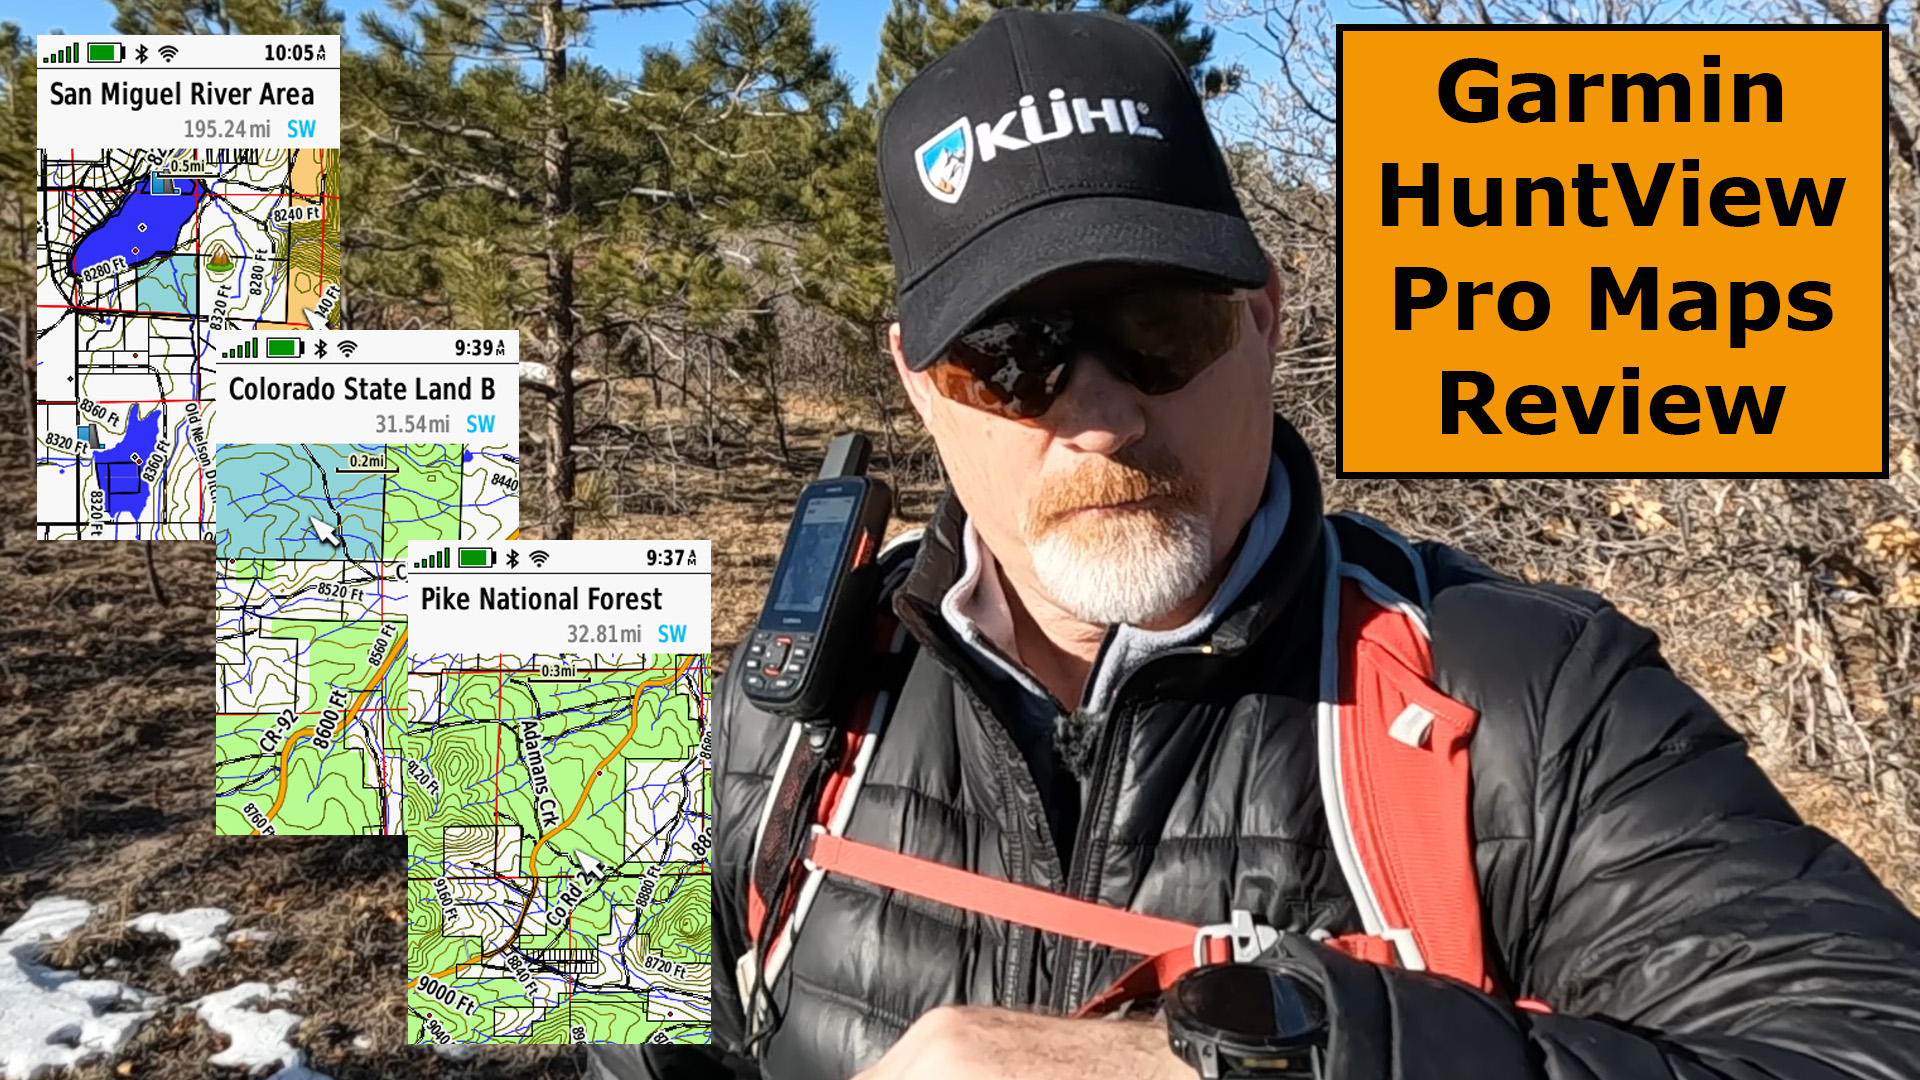 Garmin HuntView Pro Maps Review